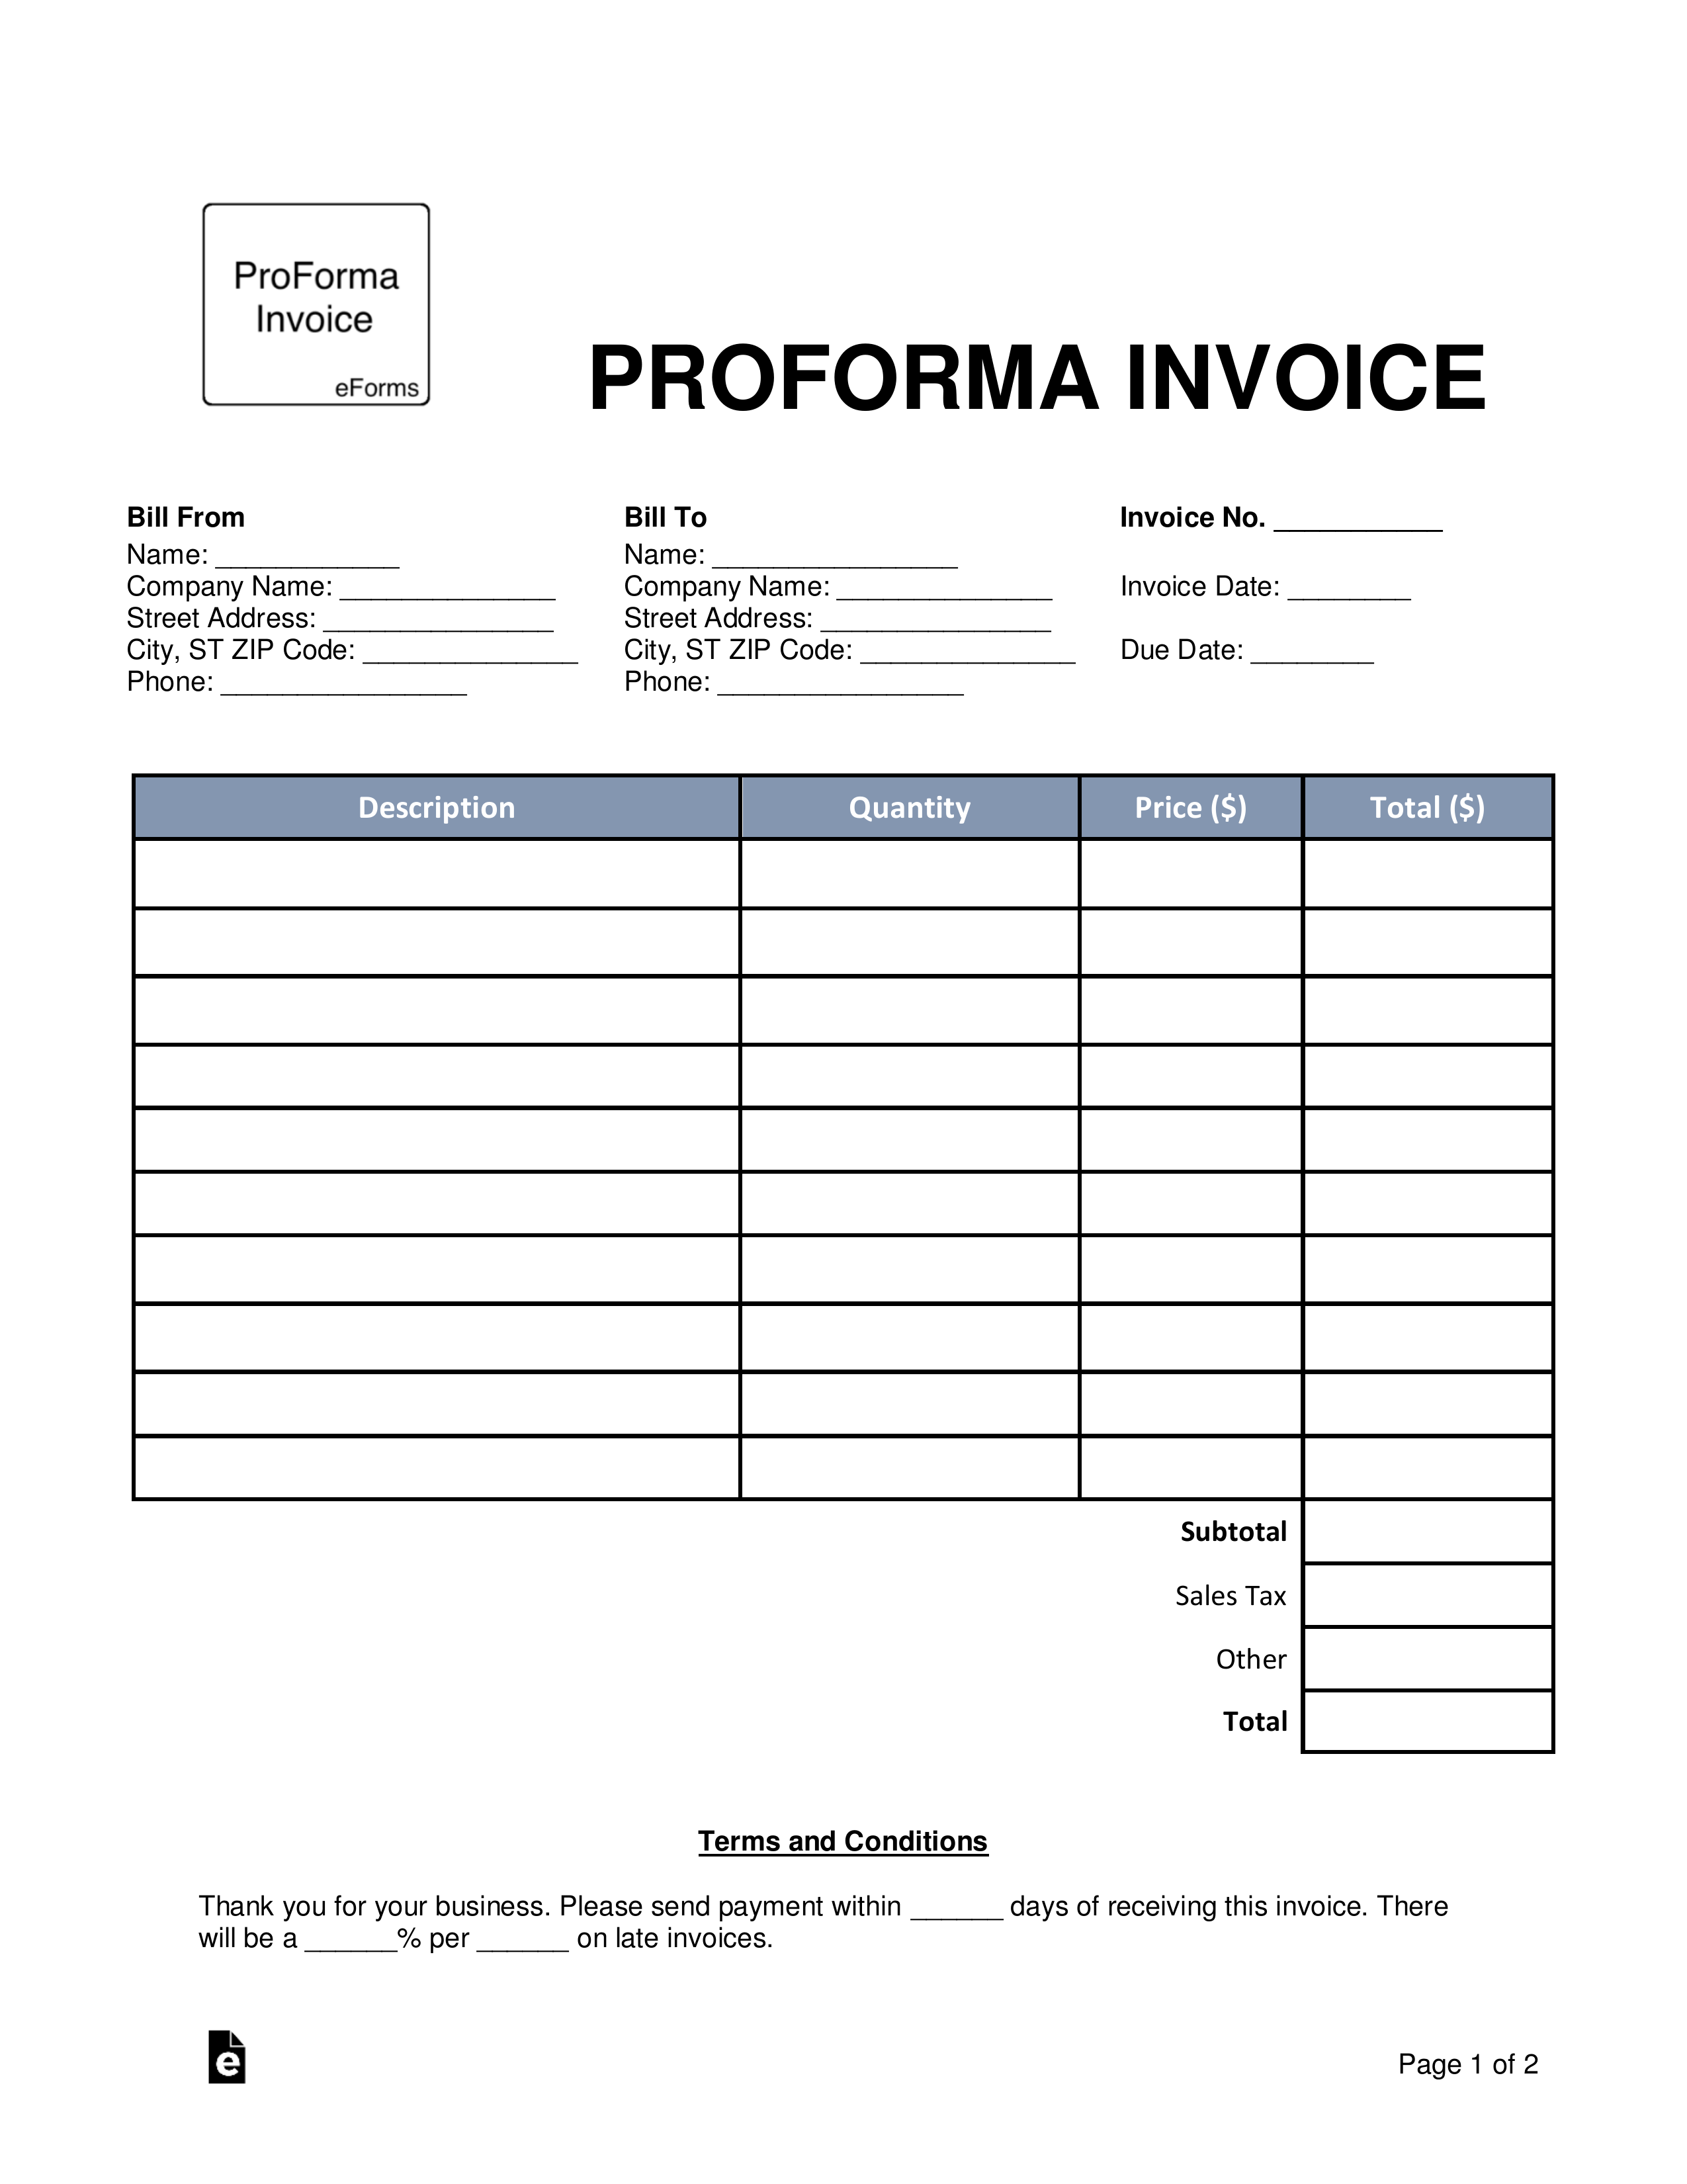 Free ProForma Invoice Template - Word  PDF – eForms Intended For Free Printable Invoice Template Microsoft Word